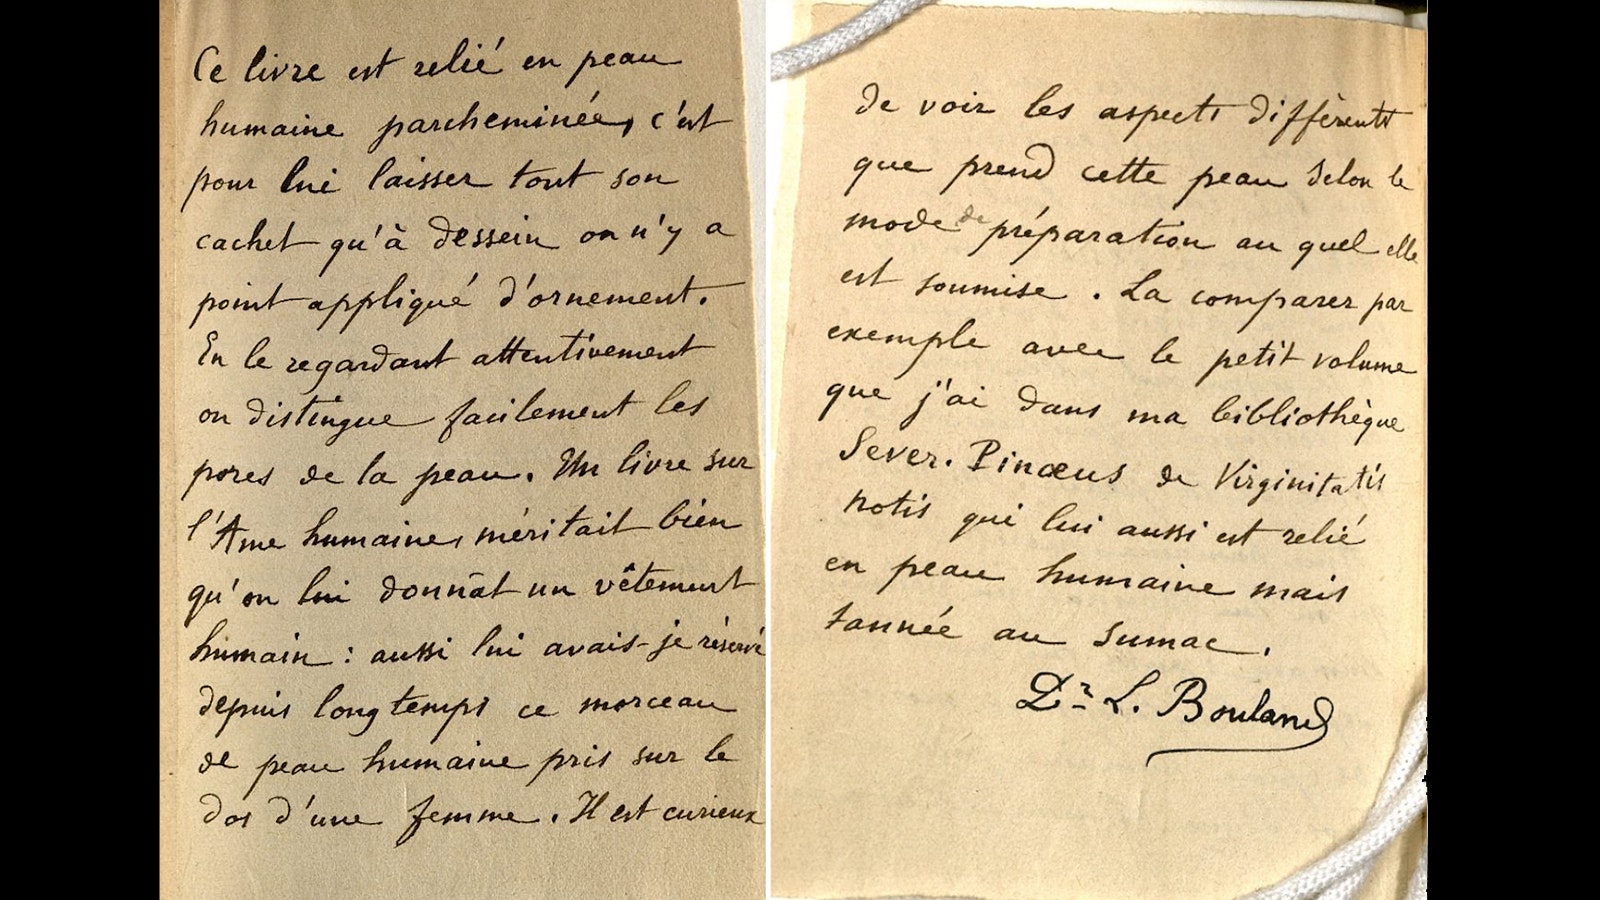 Dr. Ludovic Bouland’s handwritten letter found tucked inside "Des Destinées de L’ame."